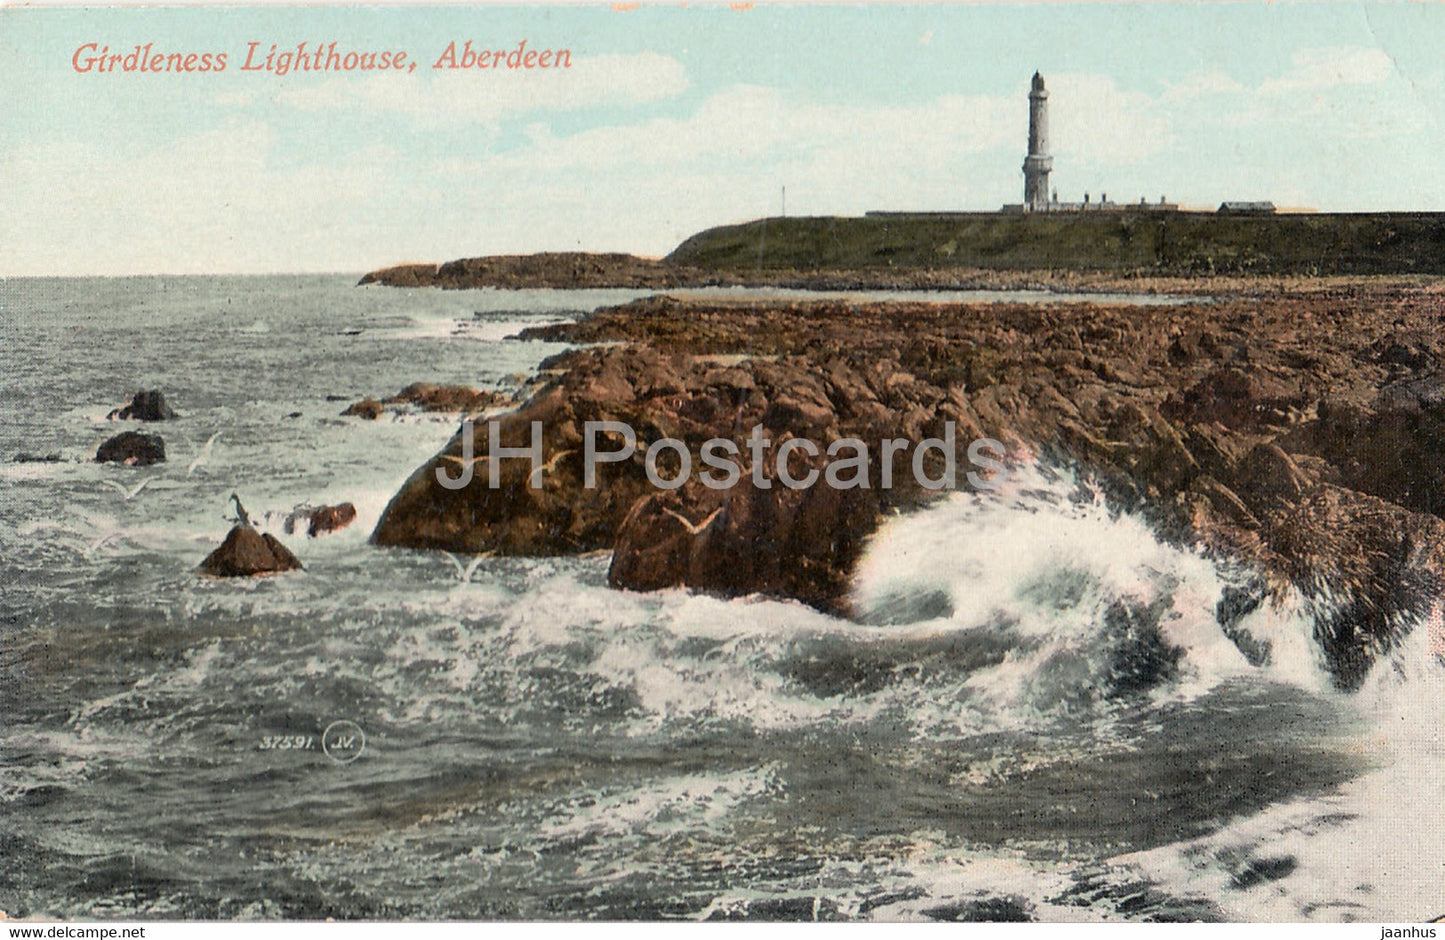 Girdleness Lighthouse - Aberdeen - 37591 - old postcard - Scotland - United Kingdom - unused - JH Postcards